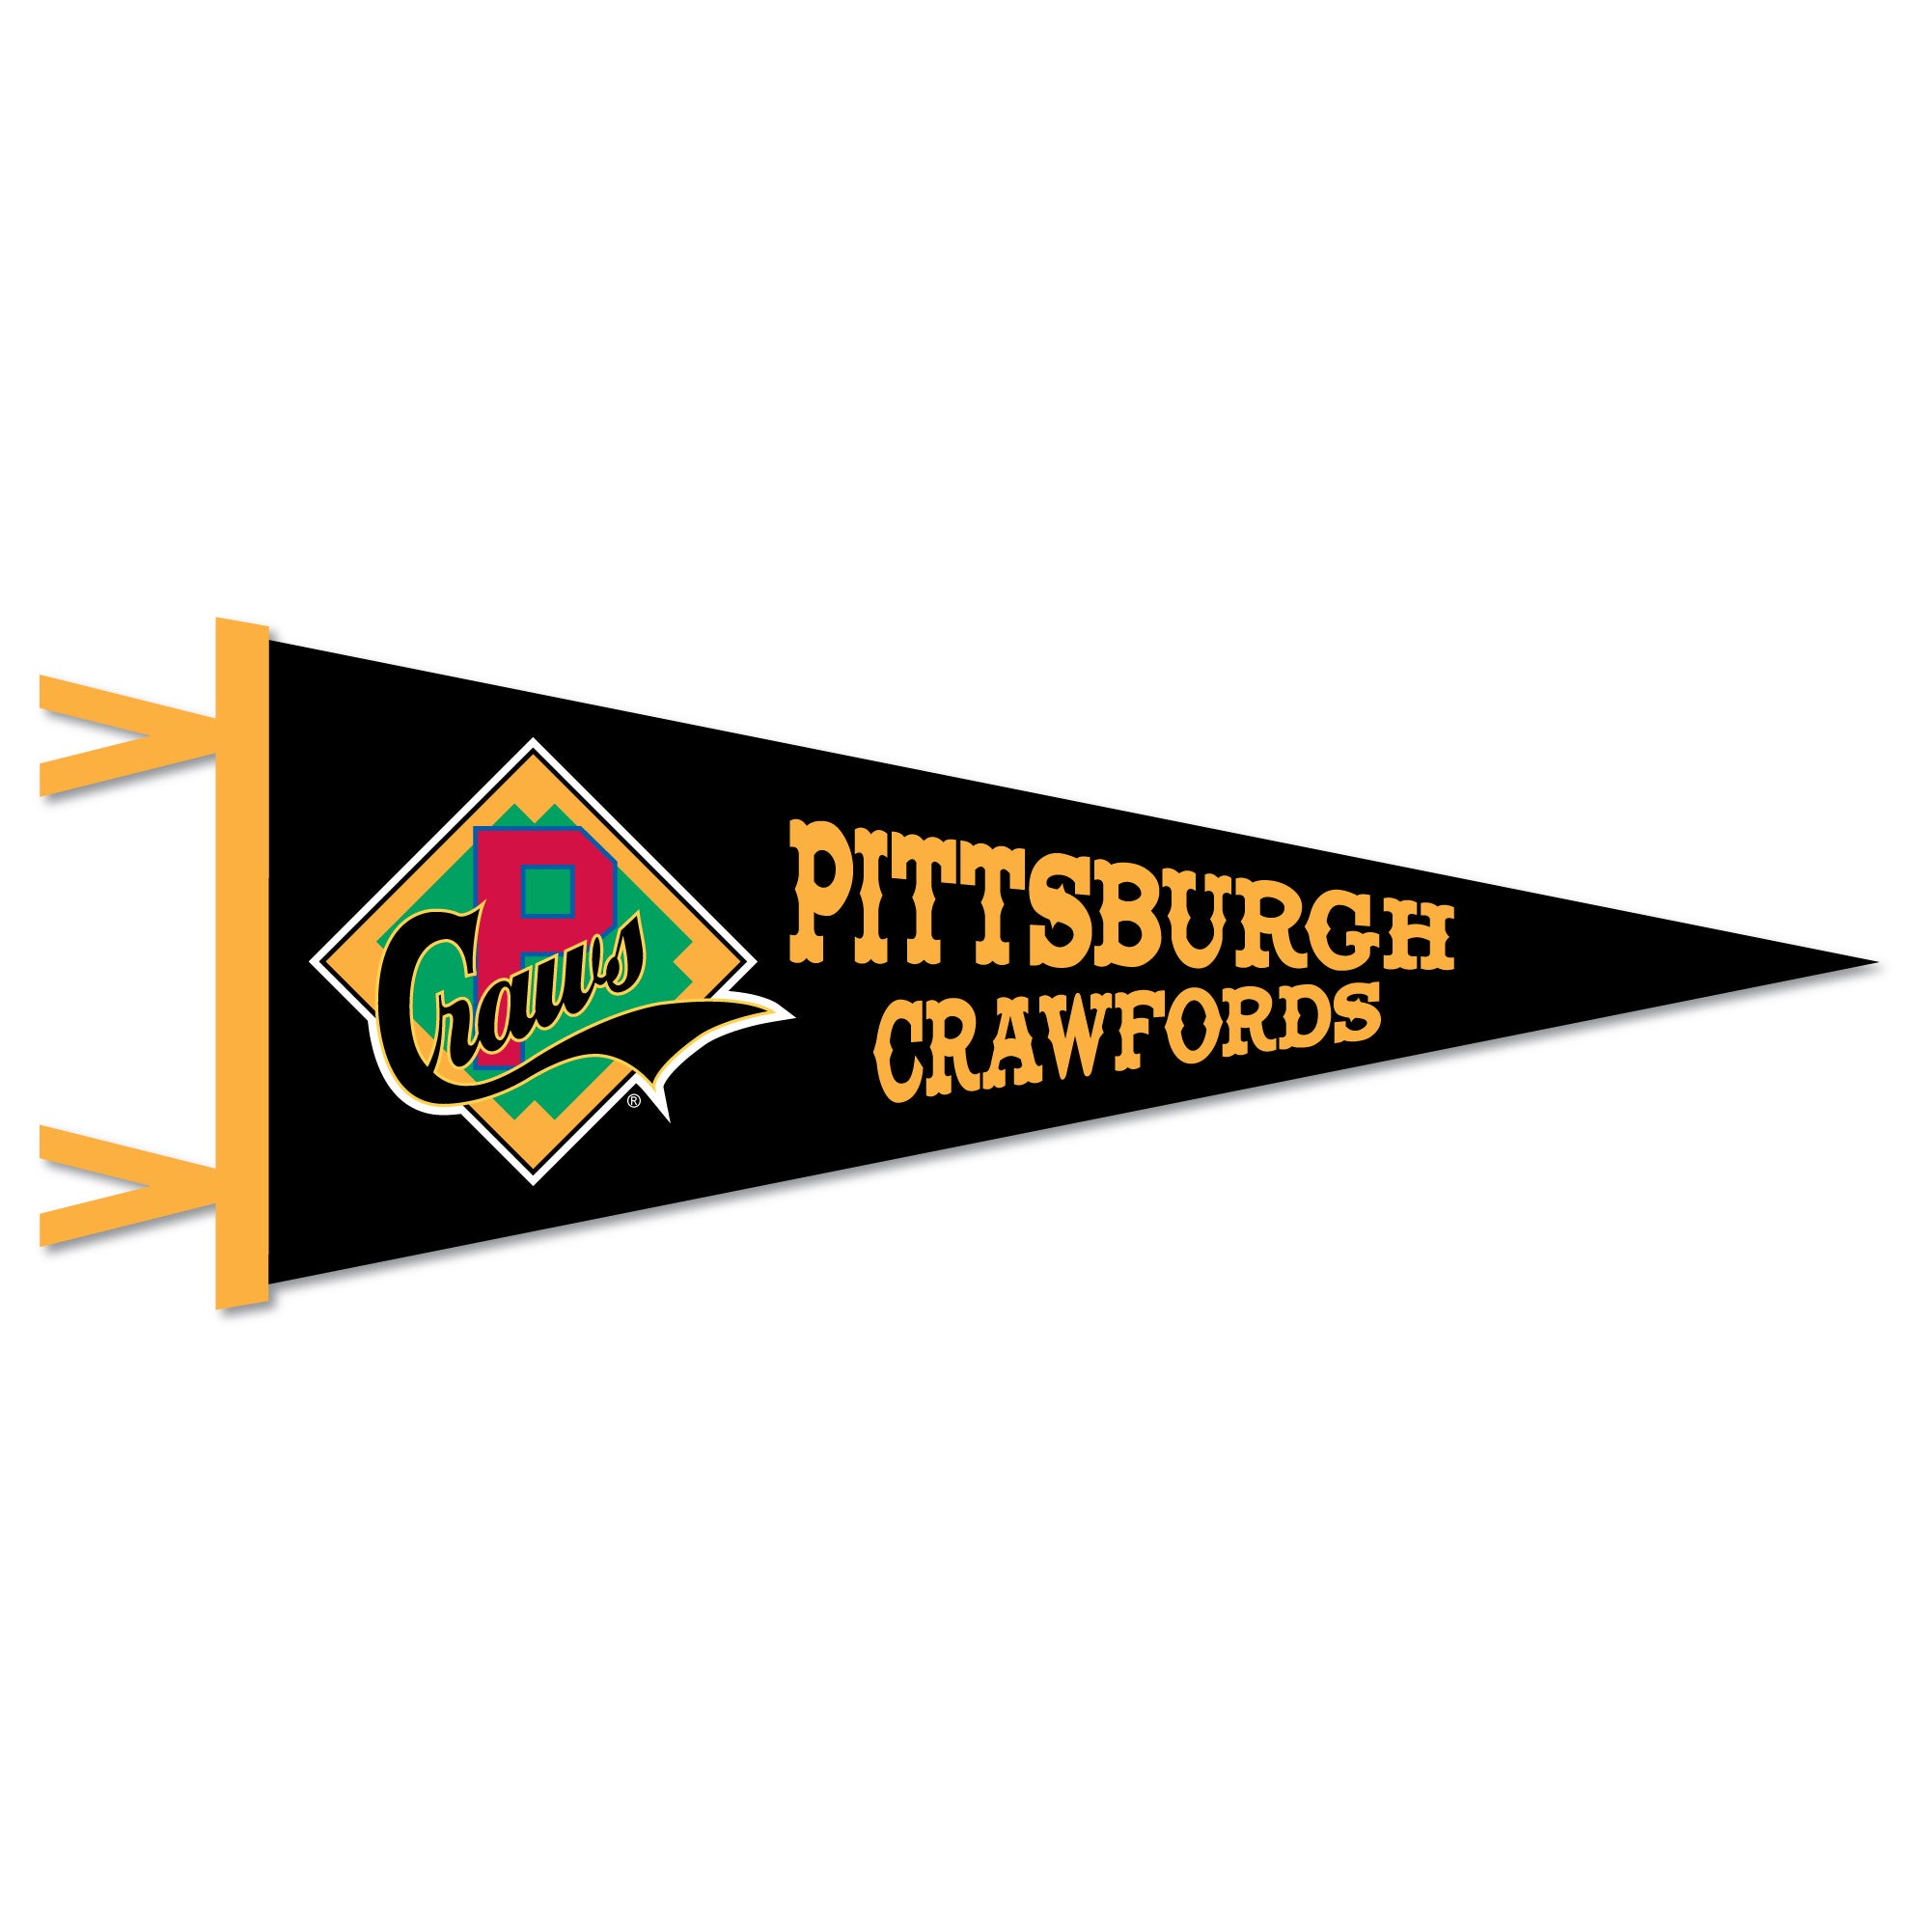 Pittsburgh Crawfords Pennant